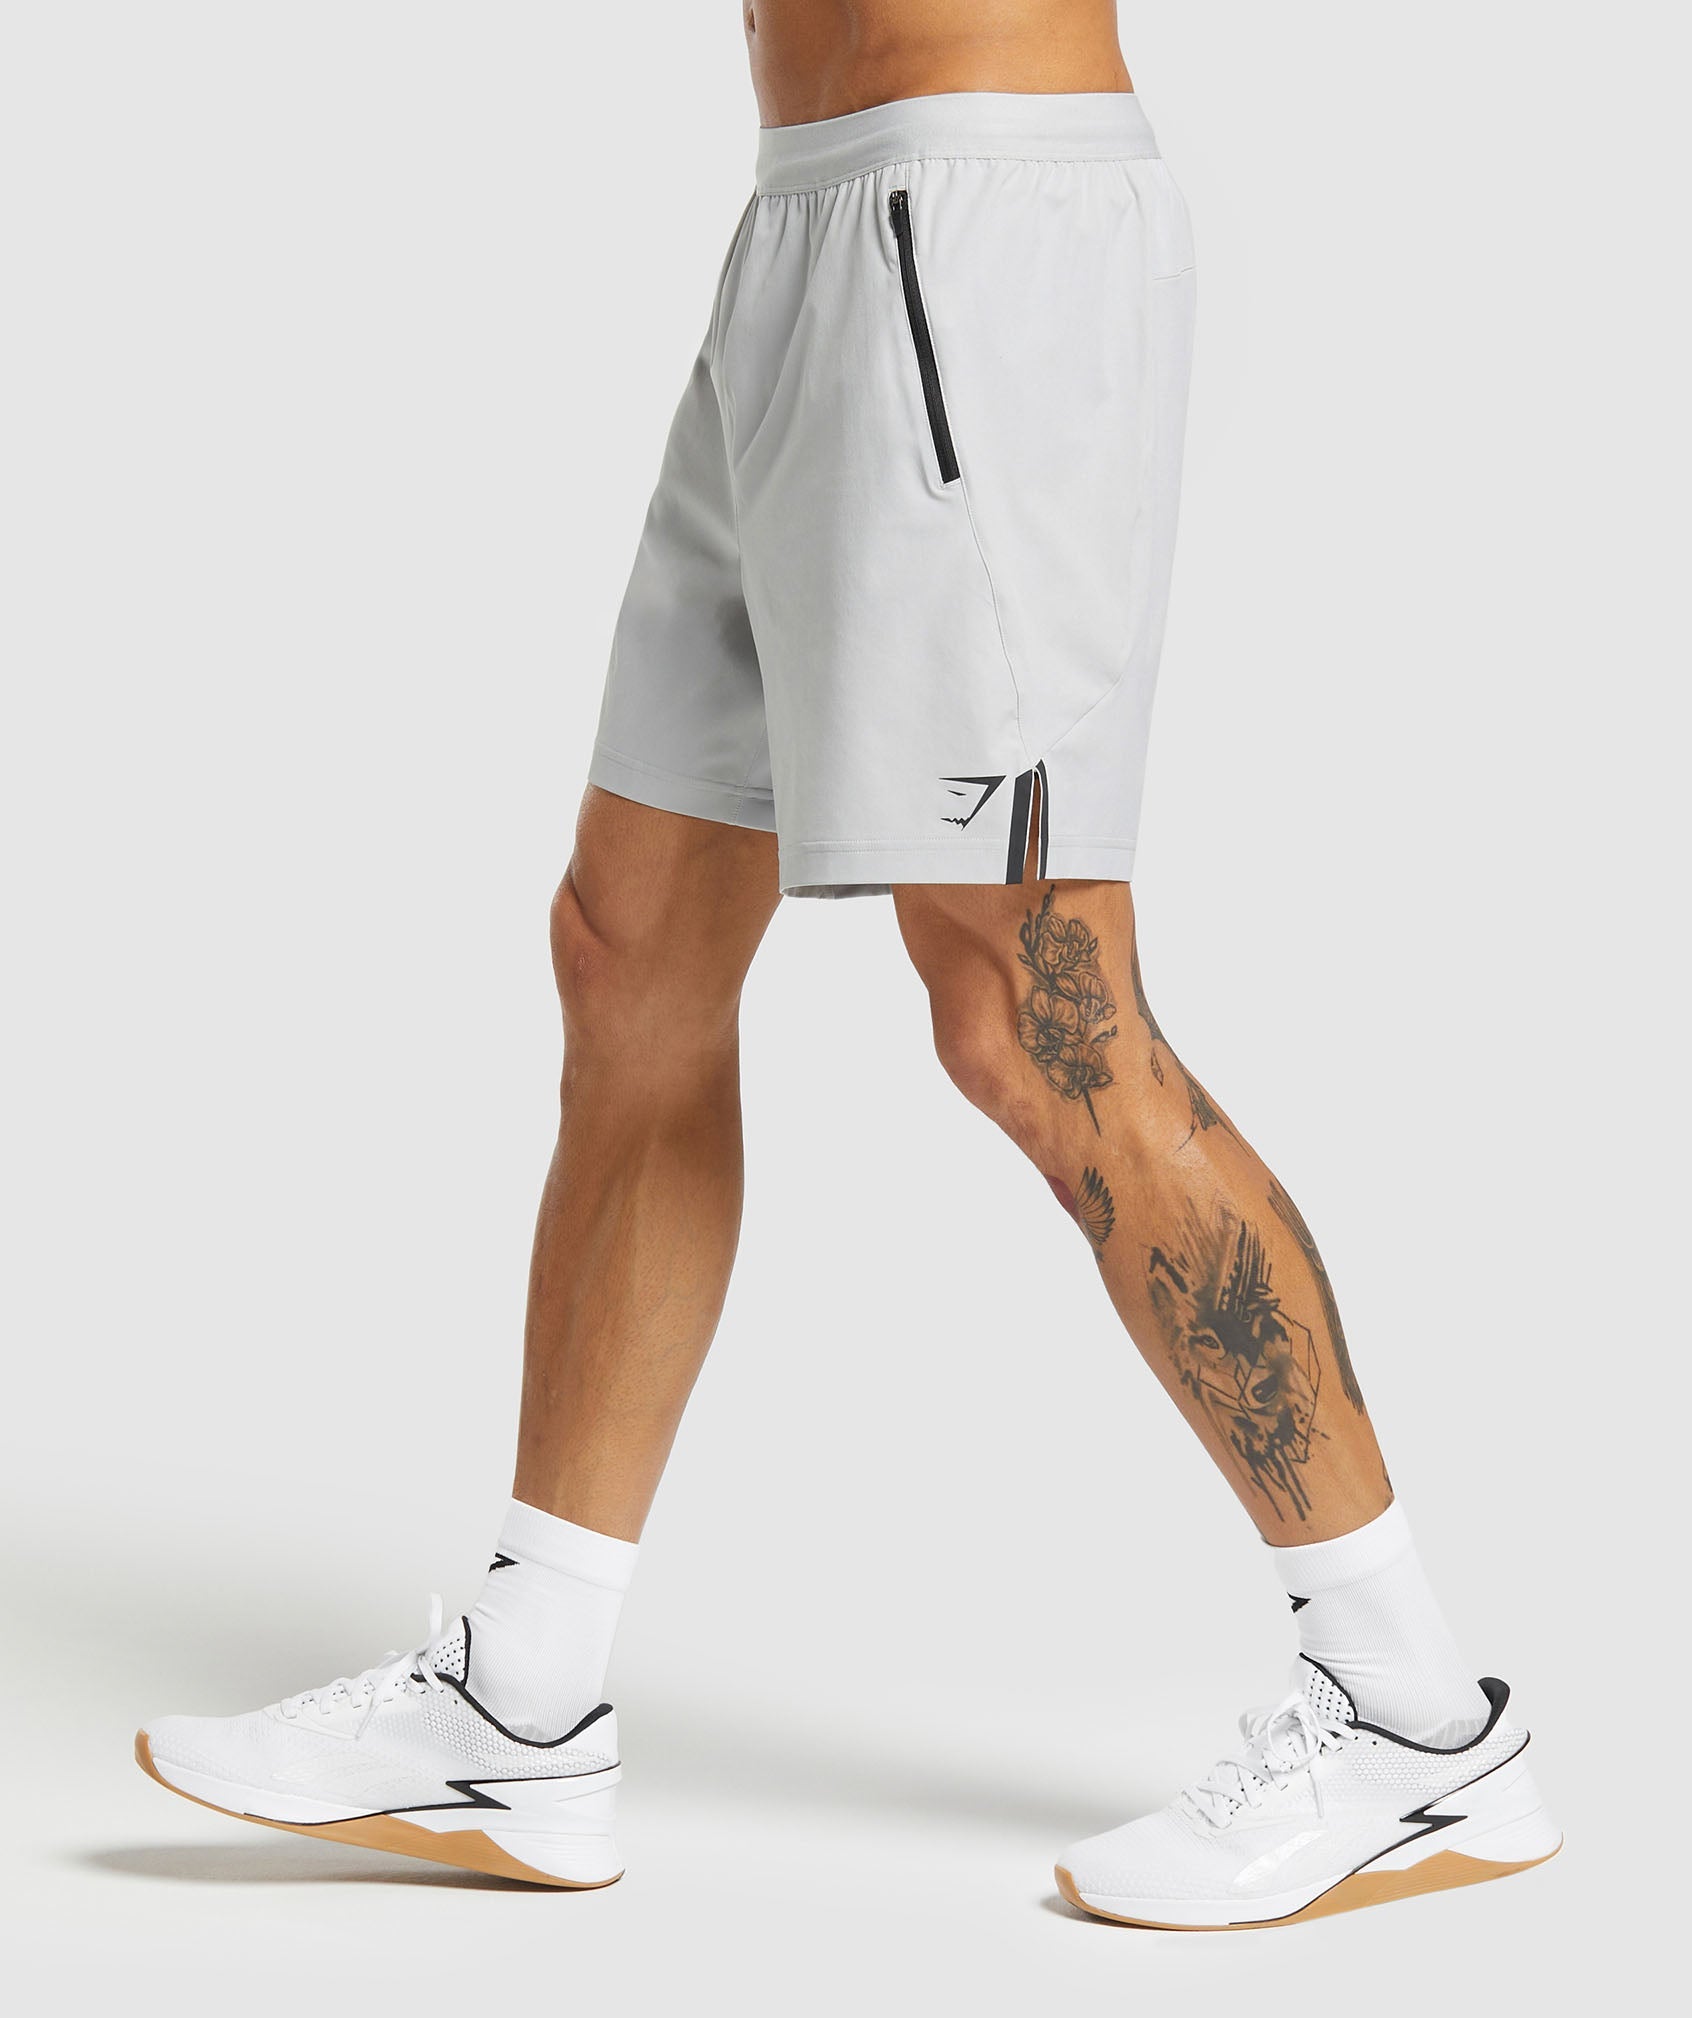 Apex 7" Hybrid Shorts in Light Grey - view 3